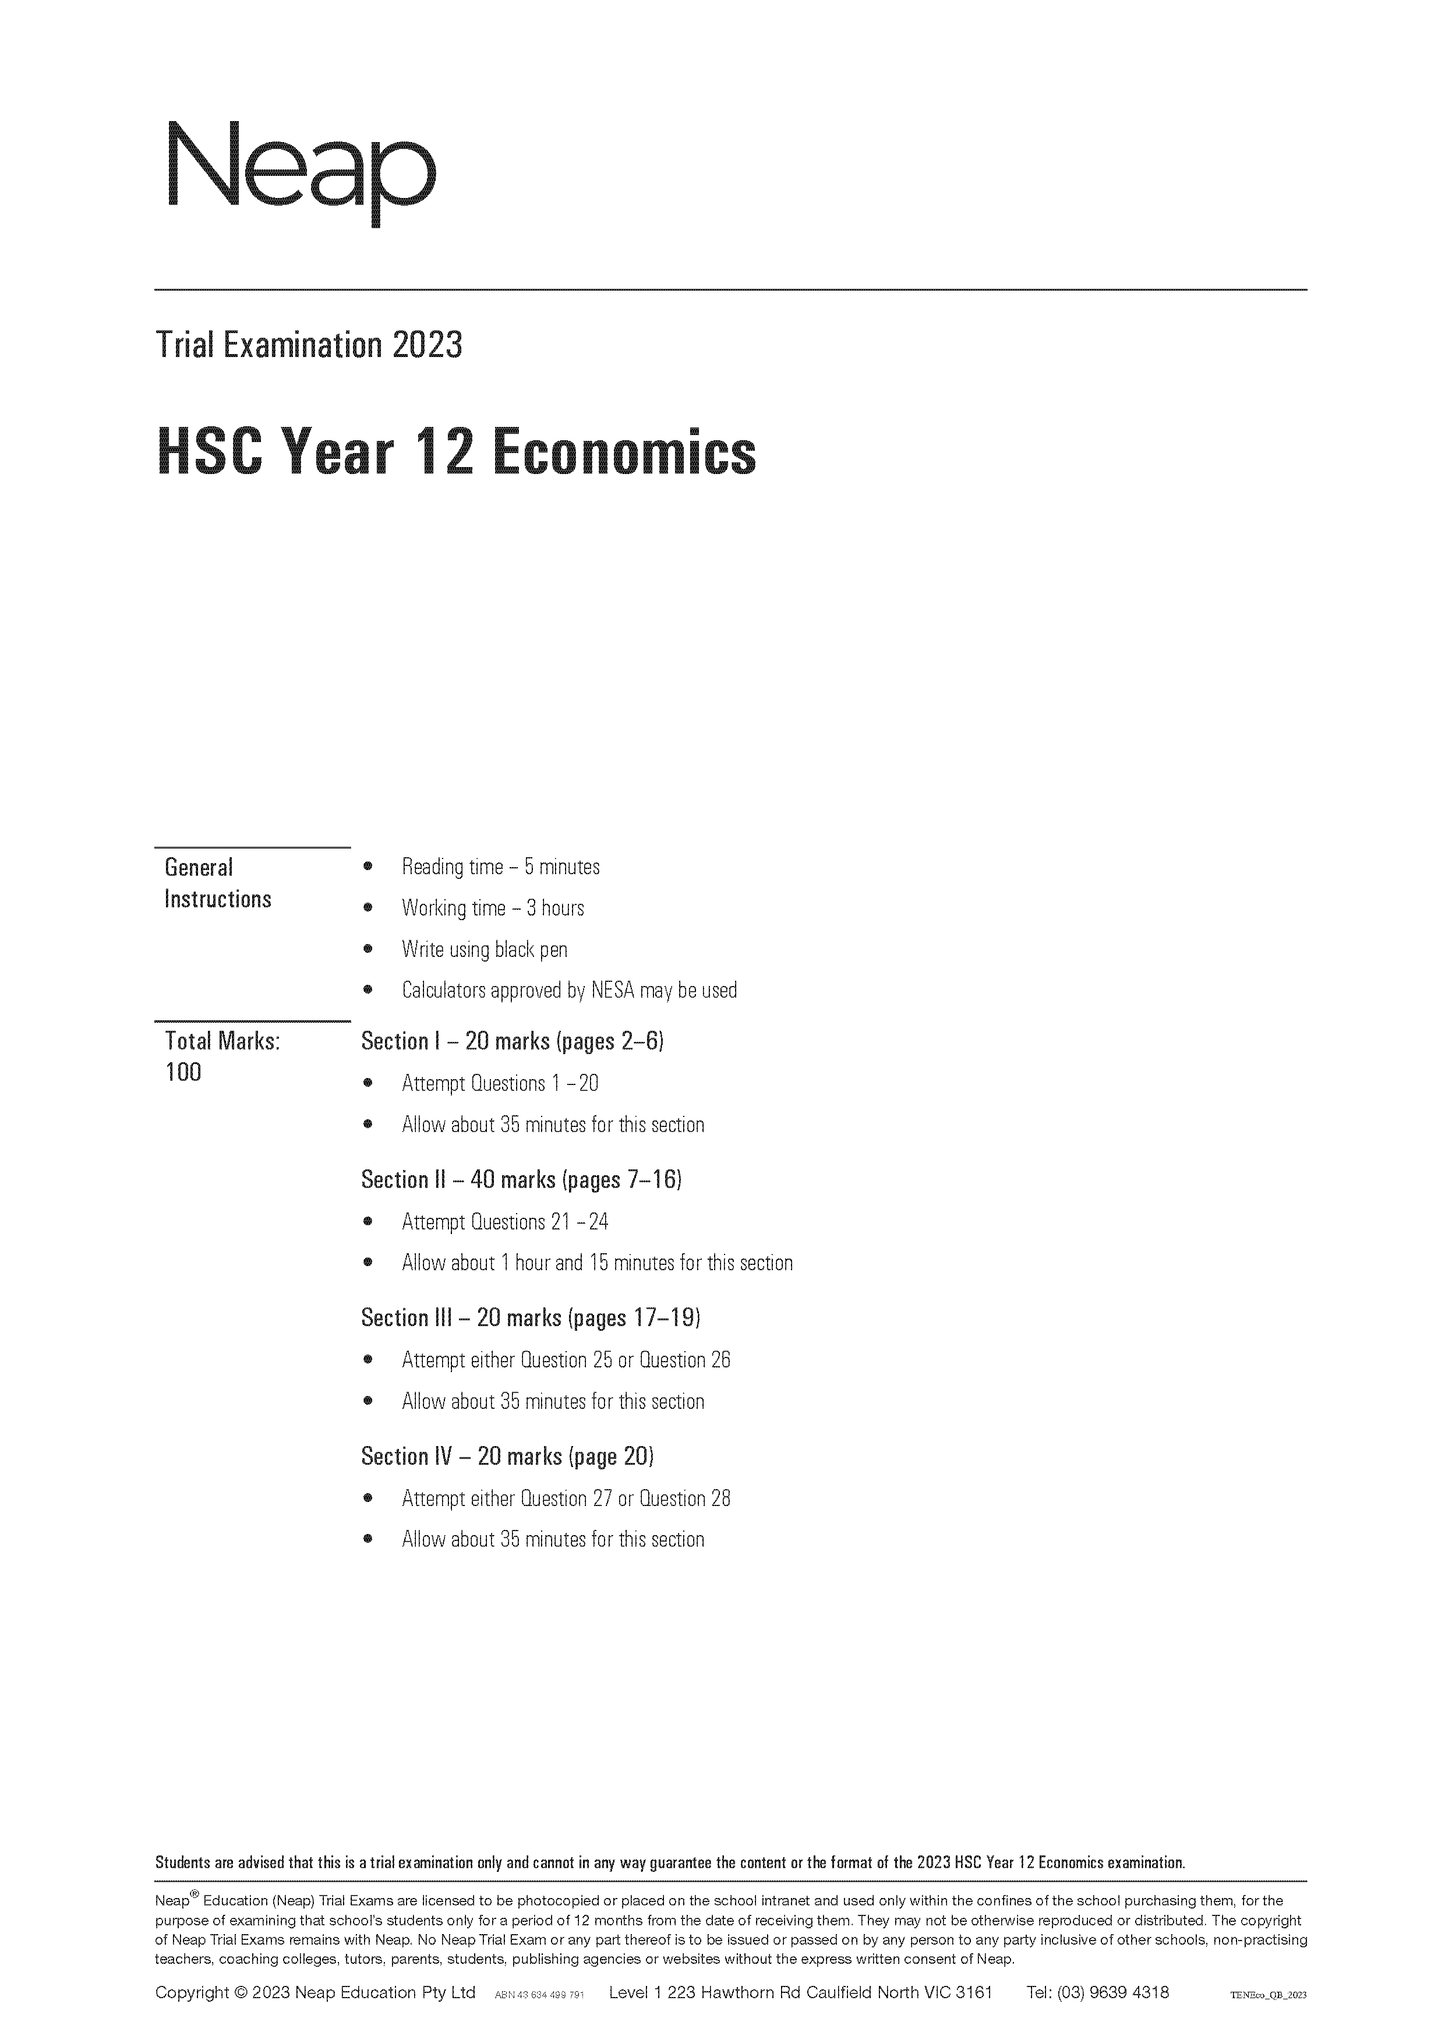 Neap Trial Exam: 2023 HSC Year 12 Economics